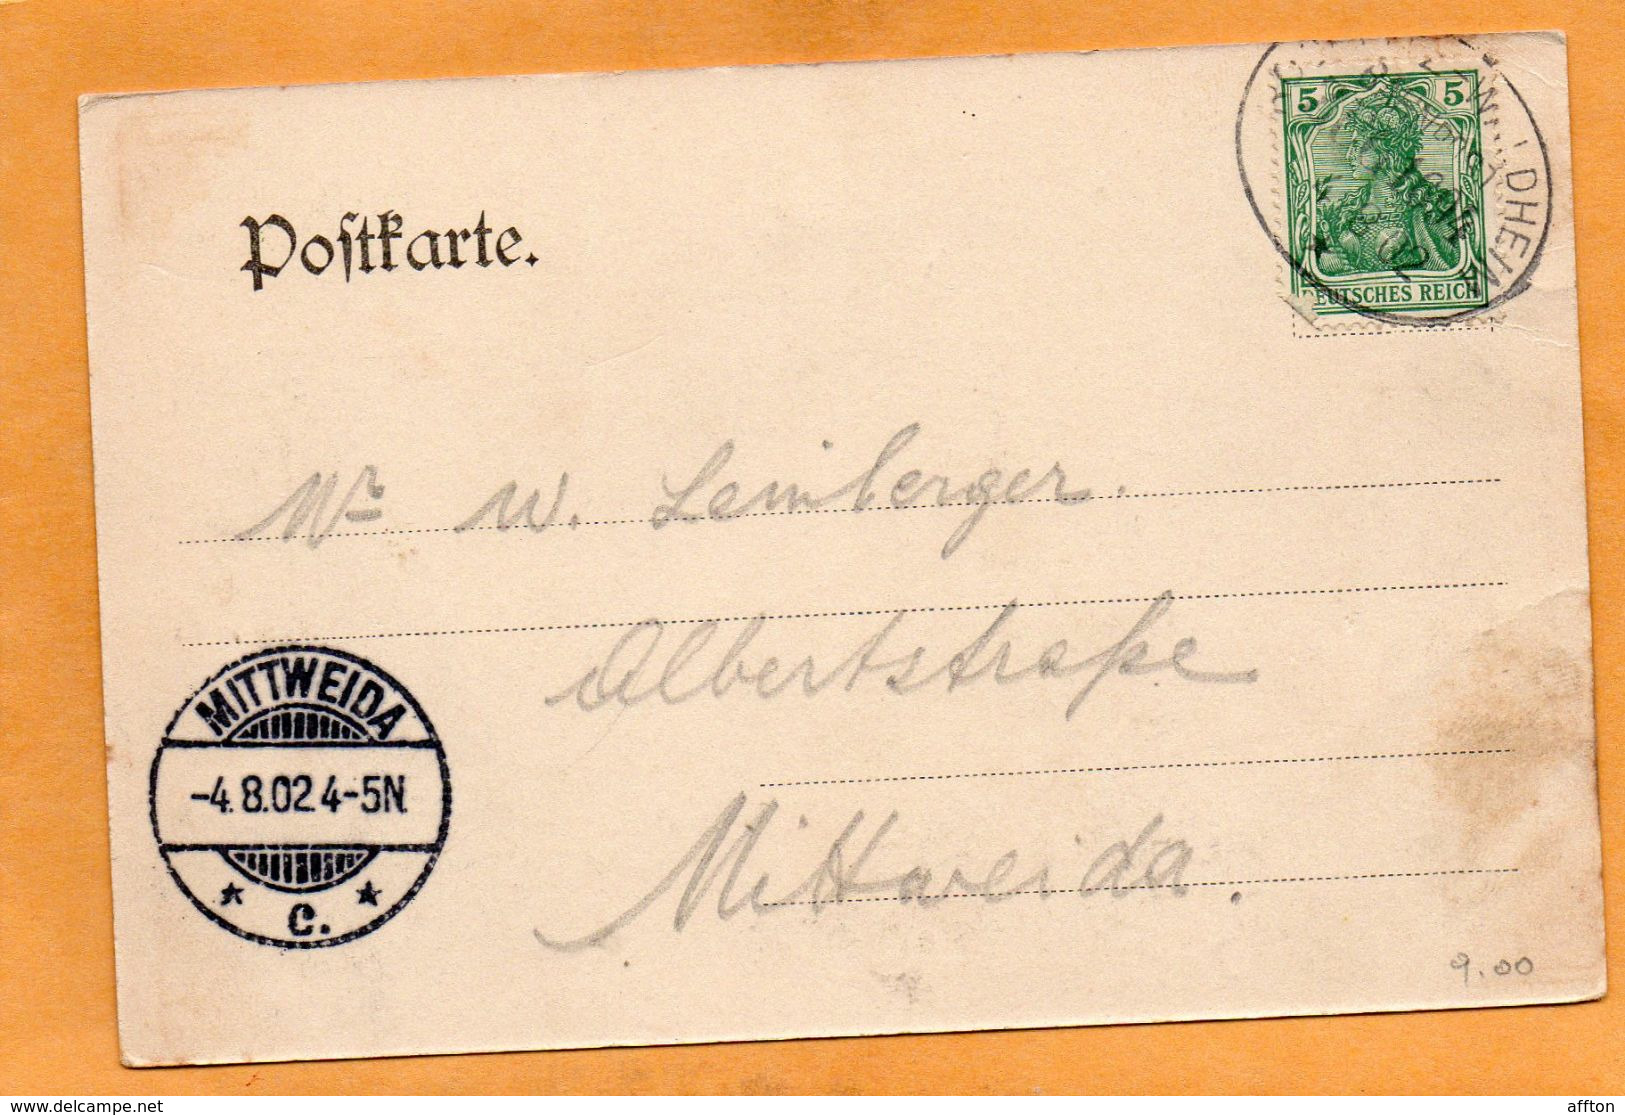 Friedrichsruh Germany 1902 Postcard - Friedrichsruh